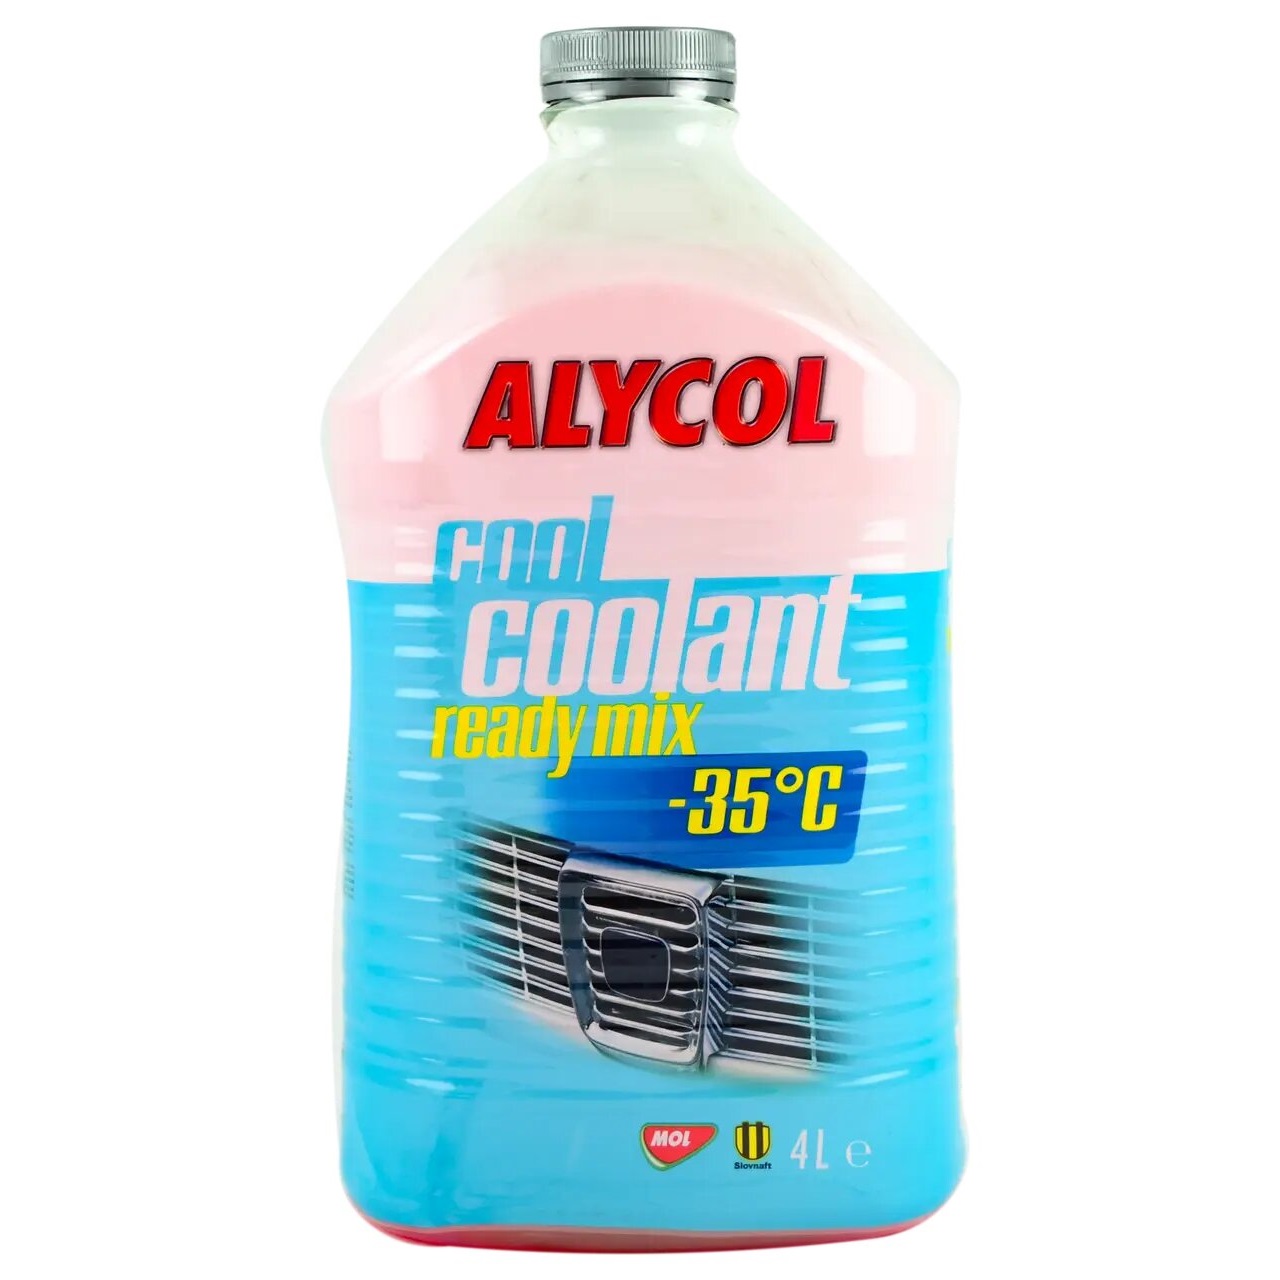 Alycol Cool Ready